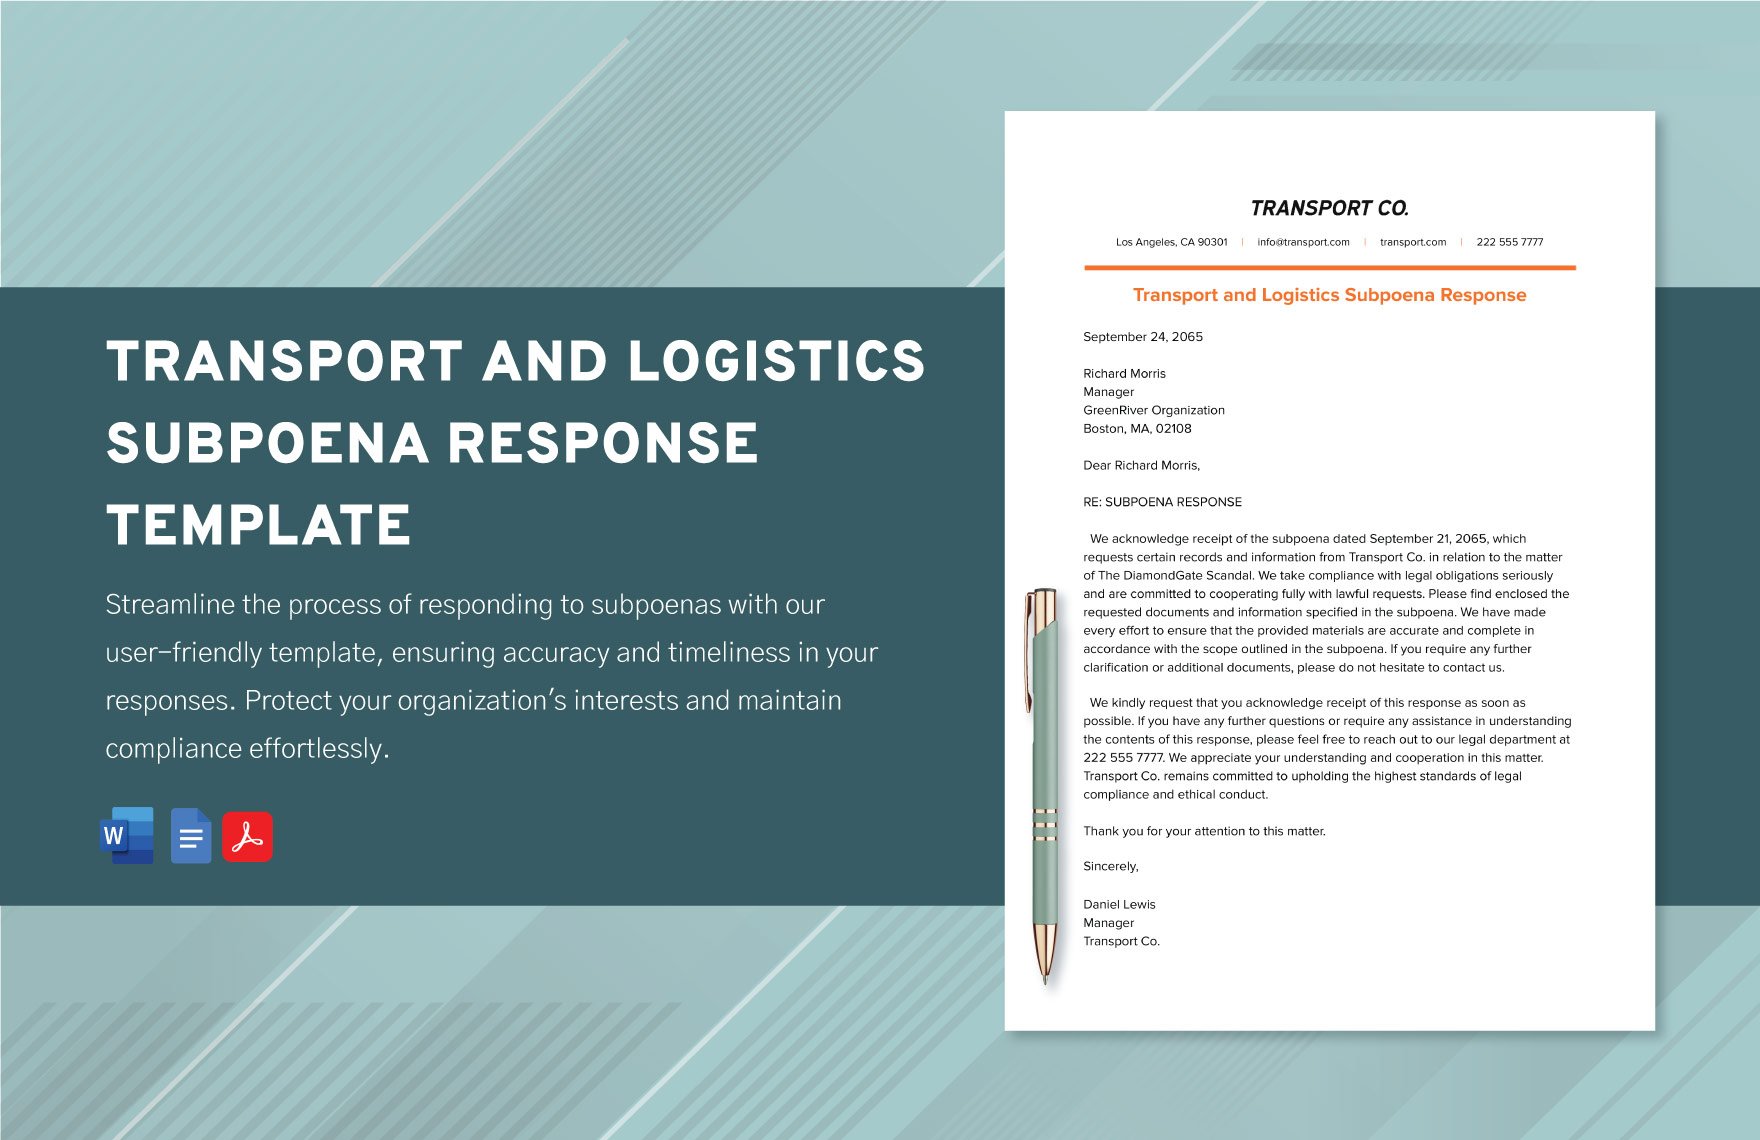 Transport and Logistics Subpoena Response Template